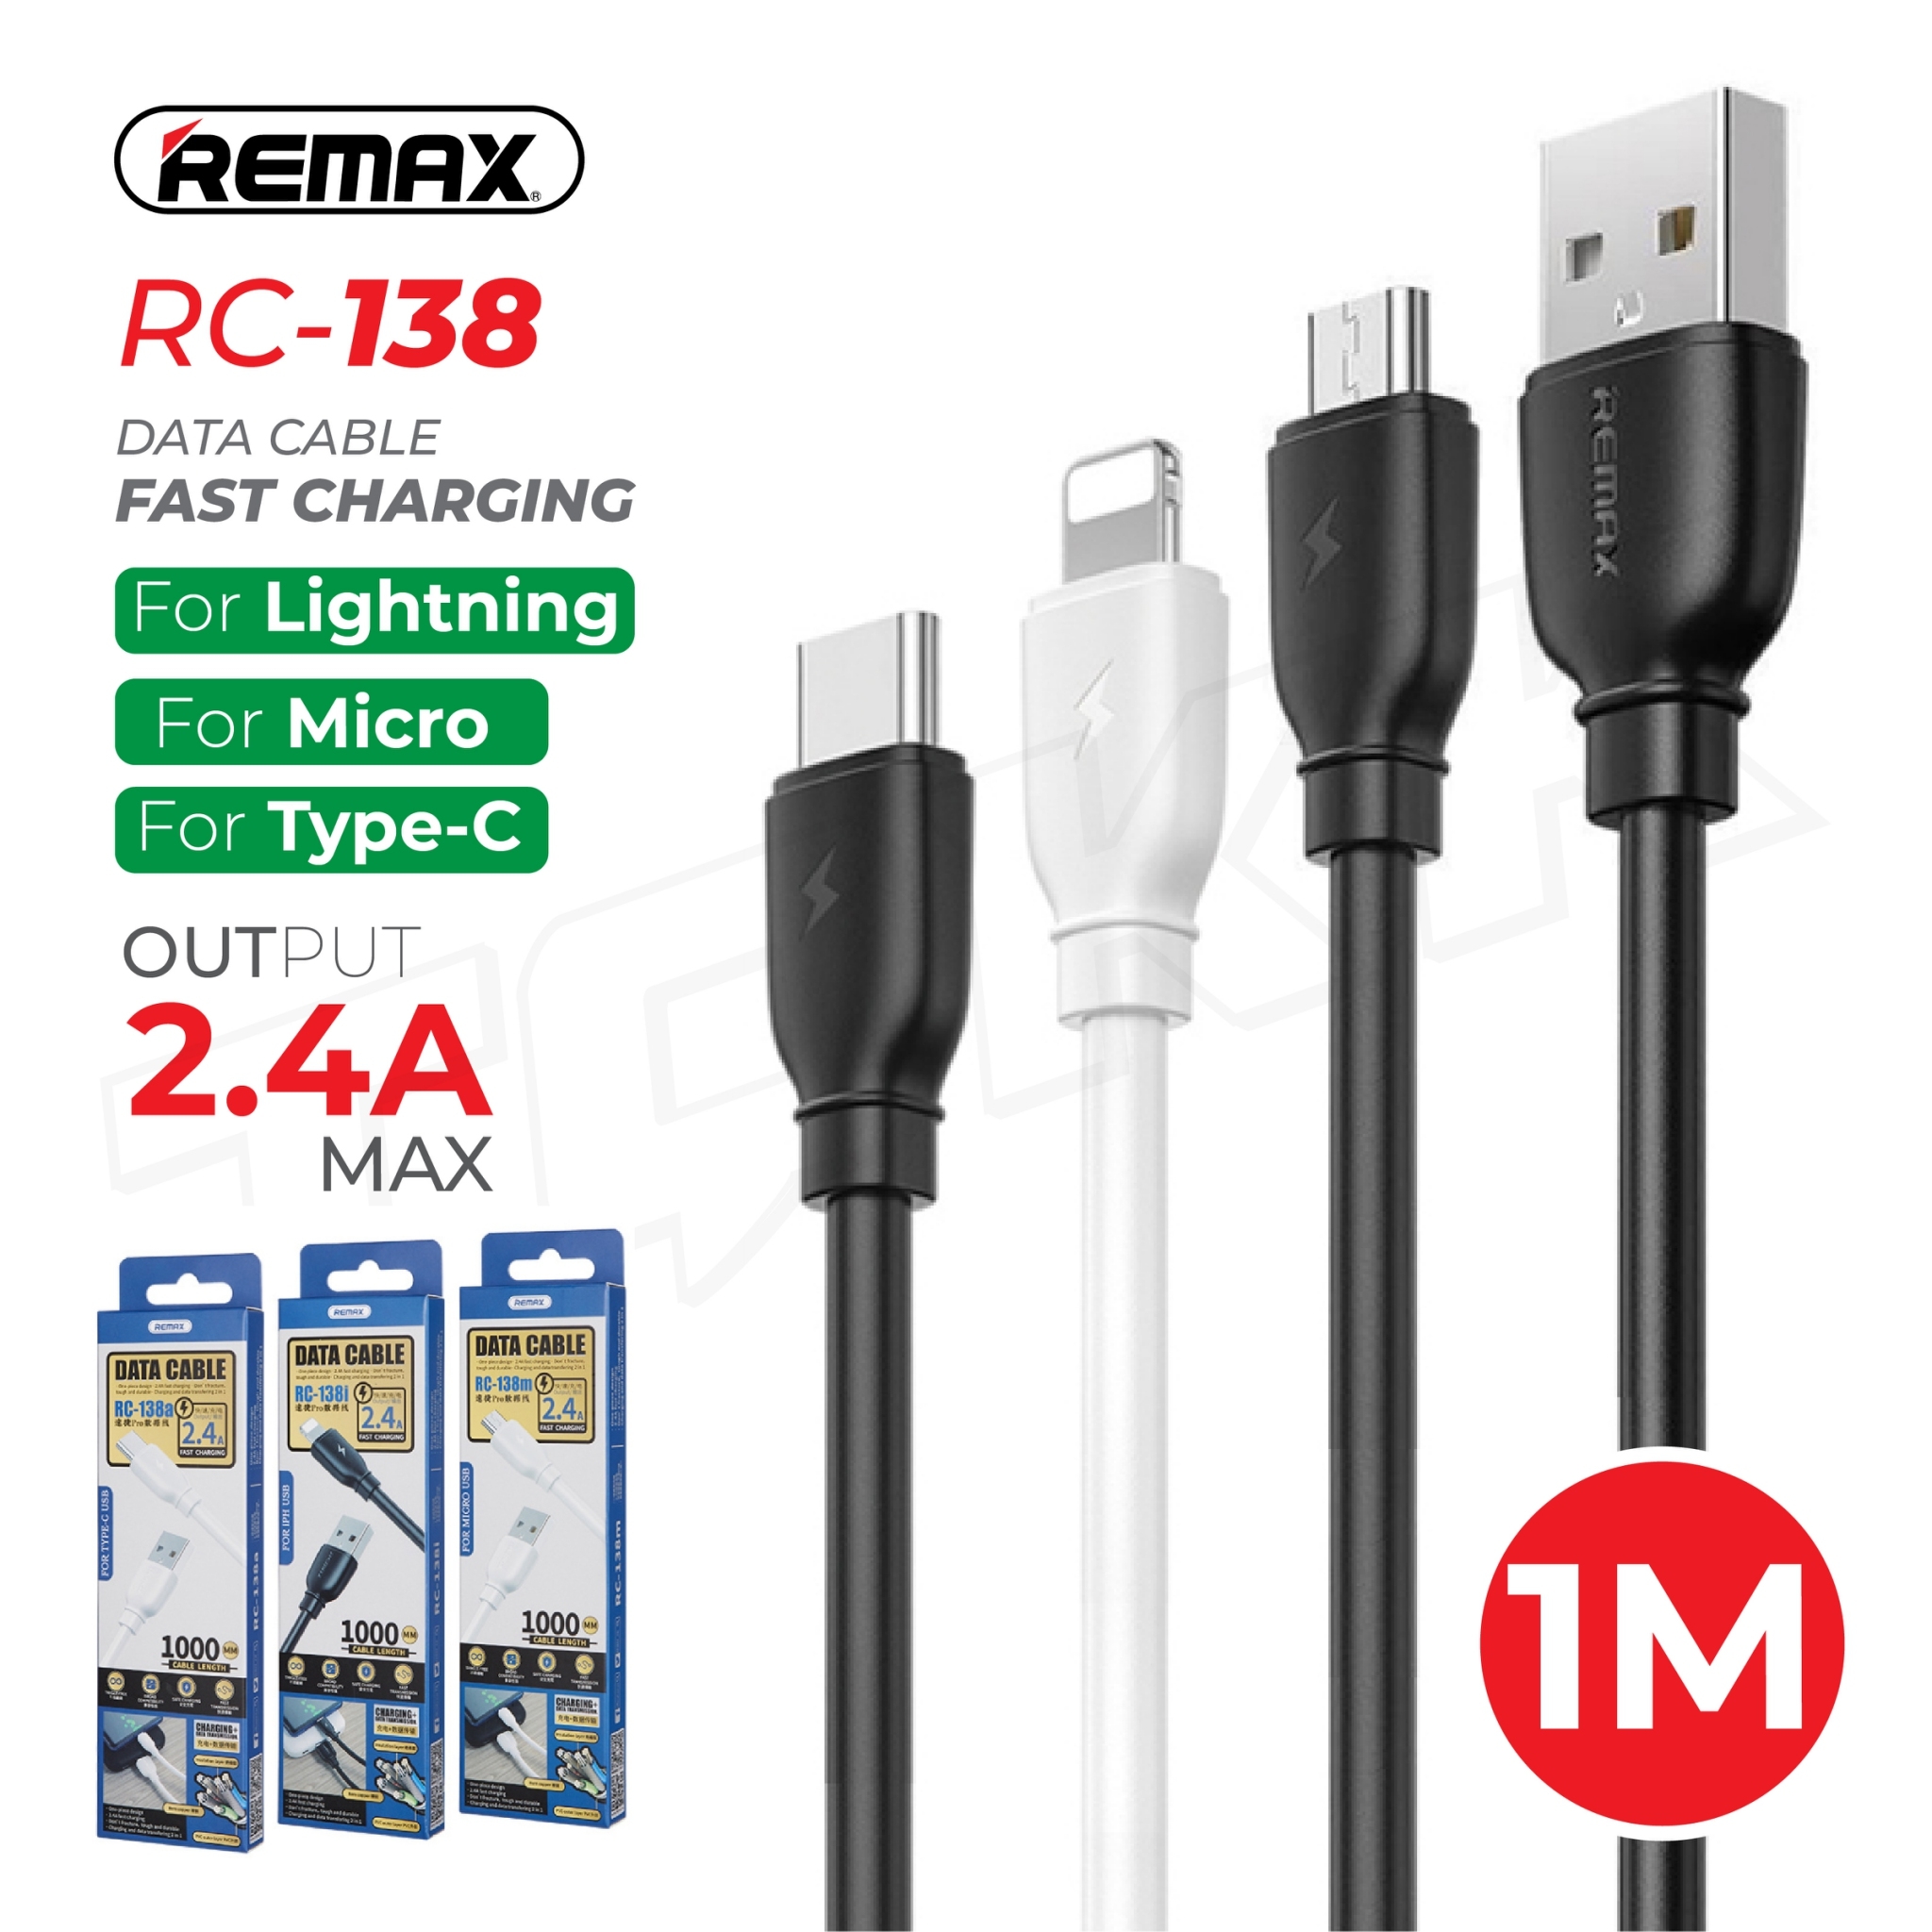 Remax RC-138 สายชาร์จ คุณภาพดี ราคาประหยัด ชาร์จเร็ว Micro/Type-C/ Lightning Fast Charging Data Cable 2.4A ของแท้100% BIG SALESALE